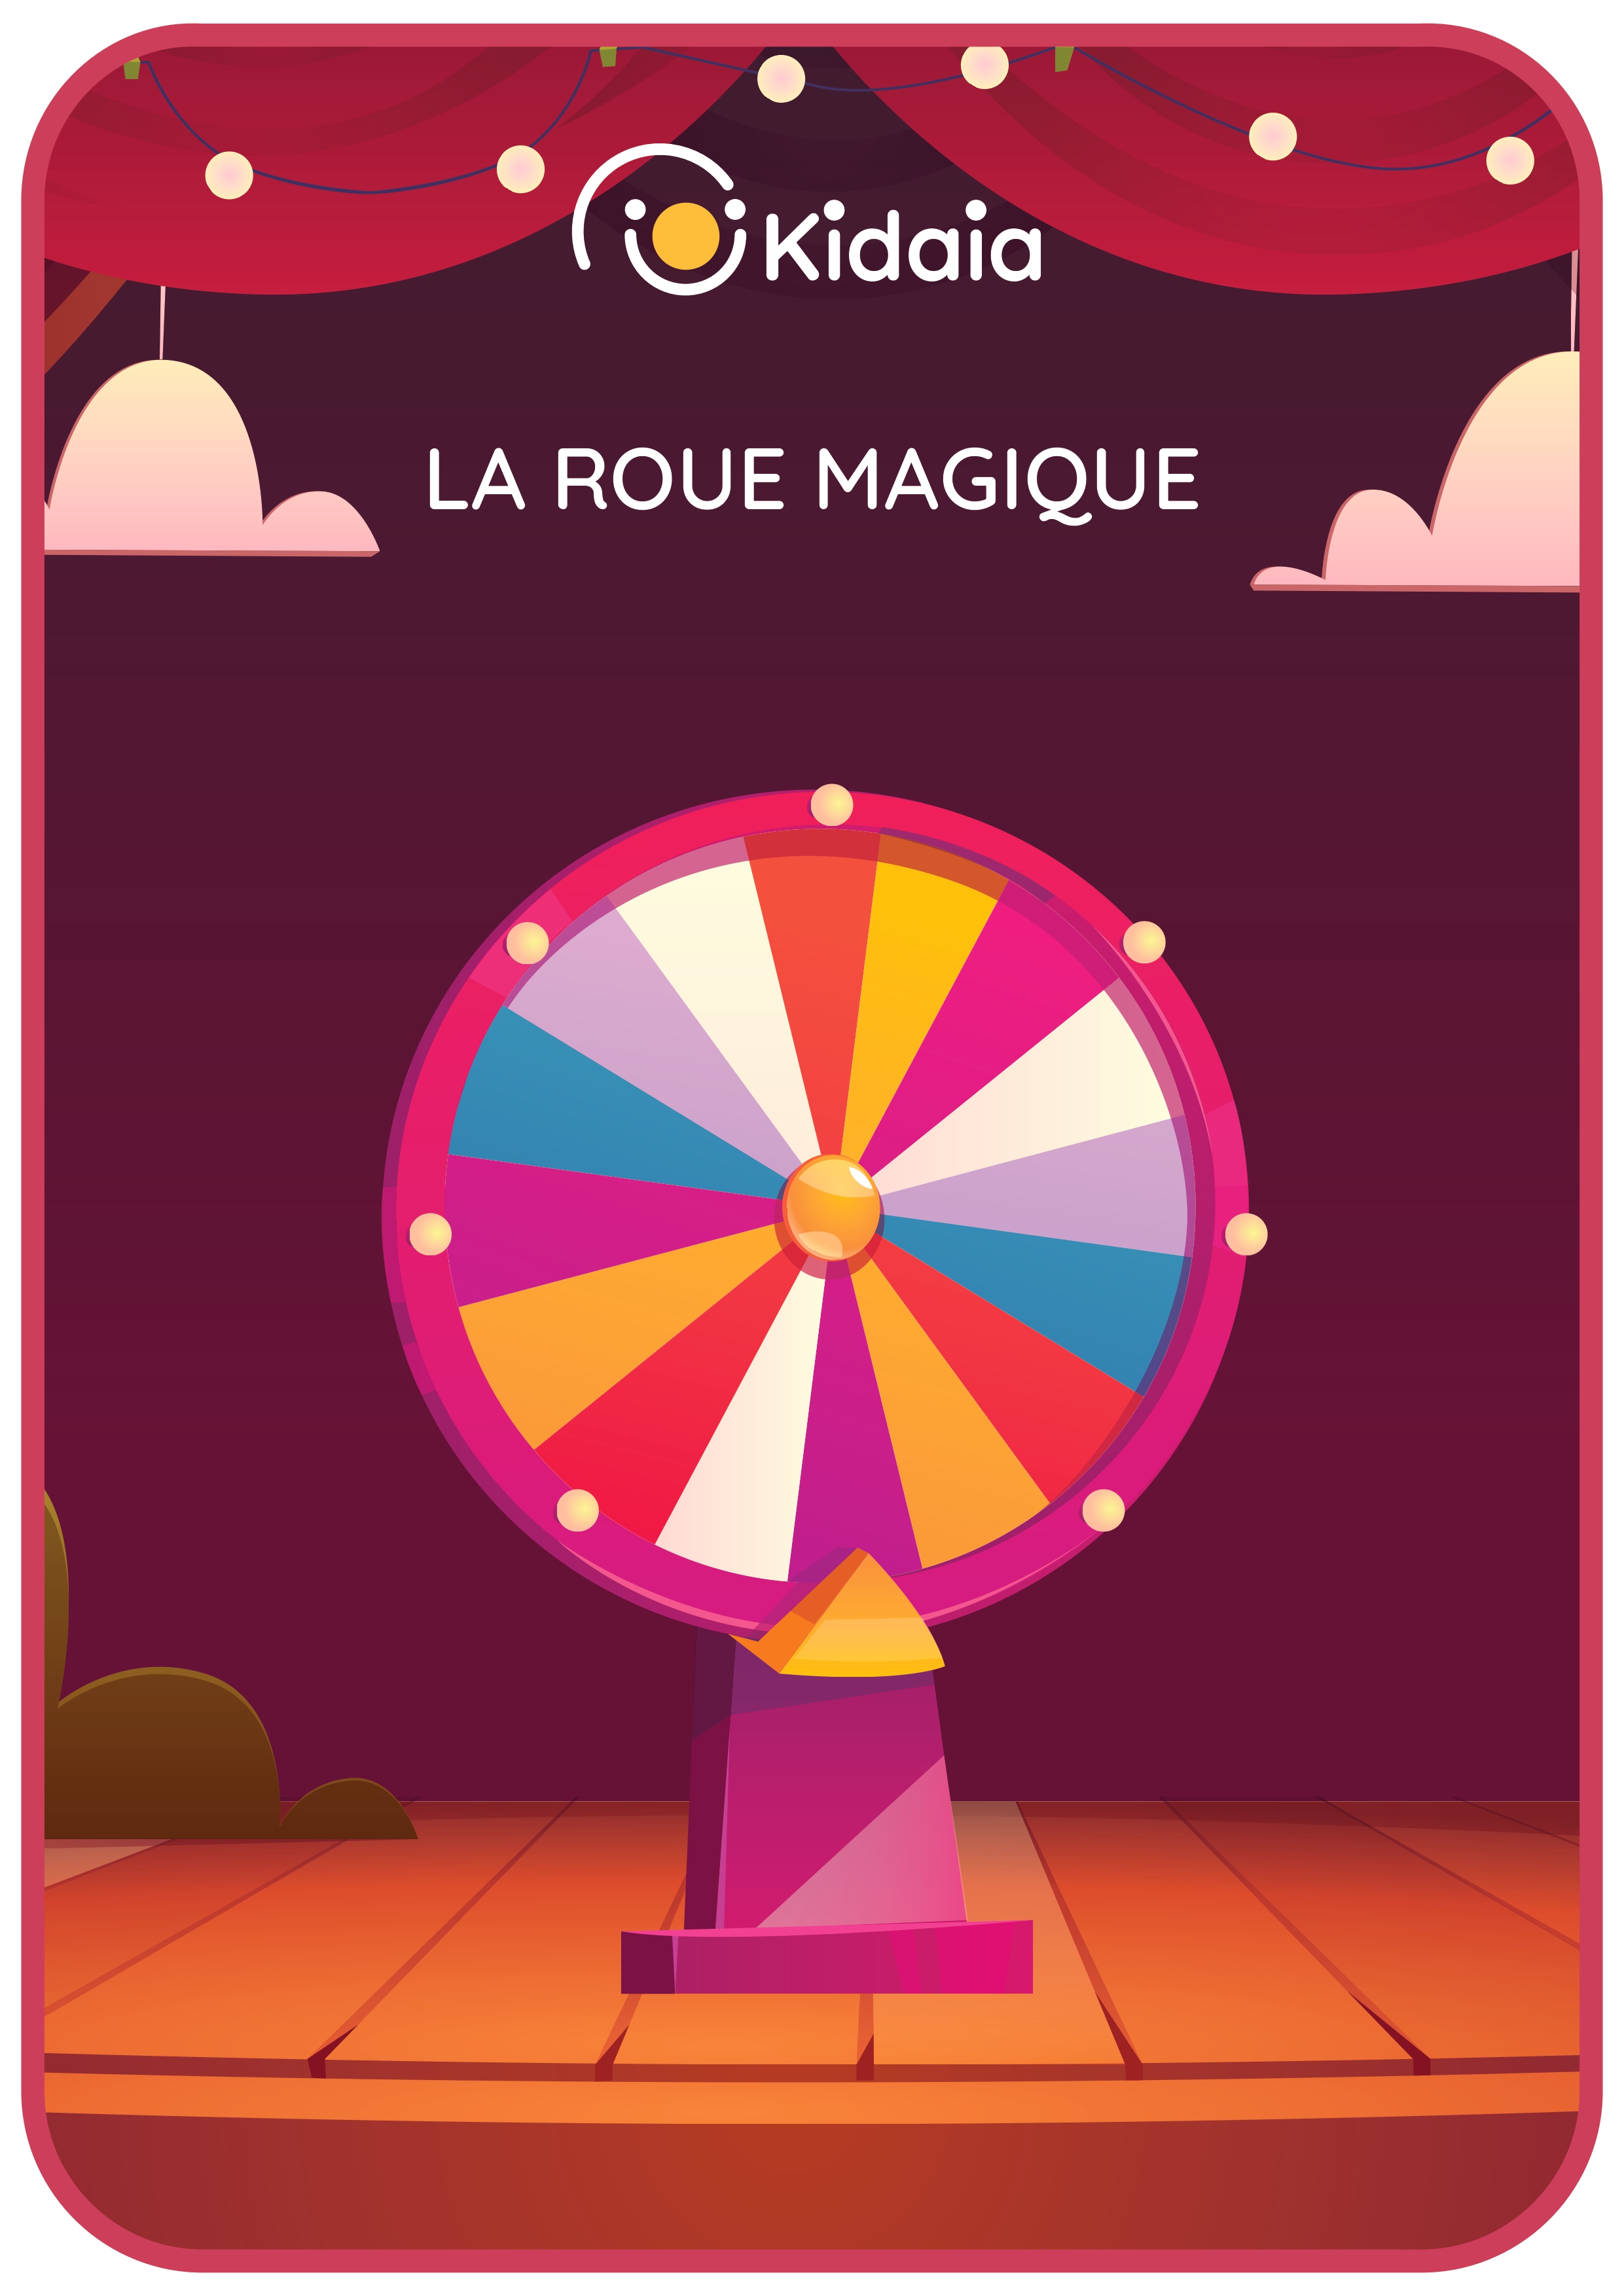 La roue magique - KIDAIA_page-0001